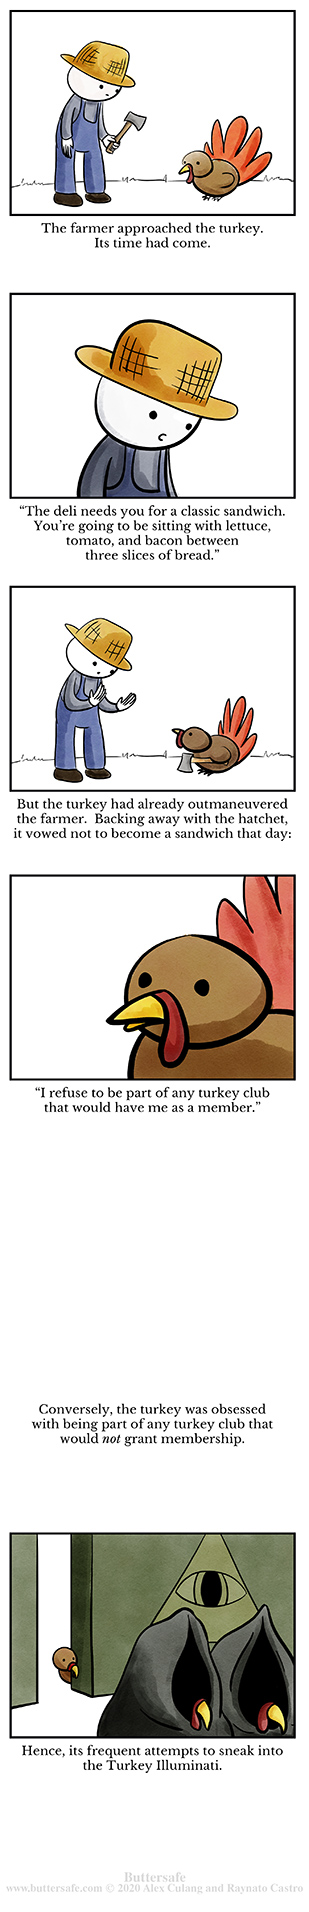 The Turkey and the Farmer